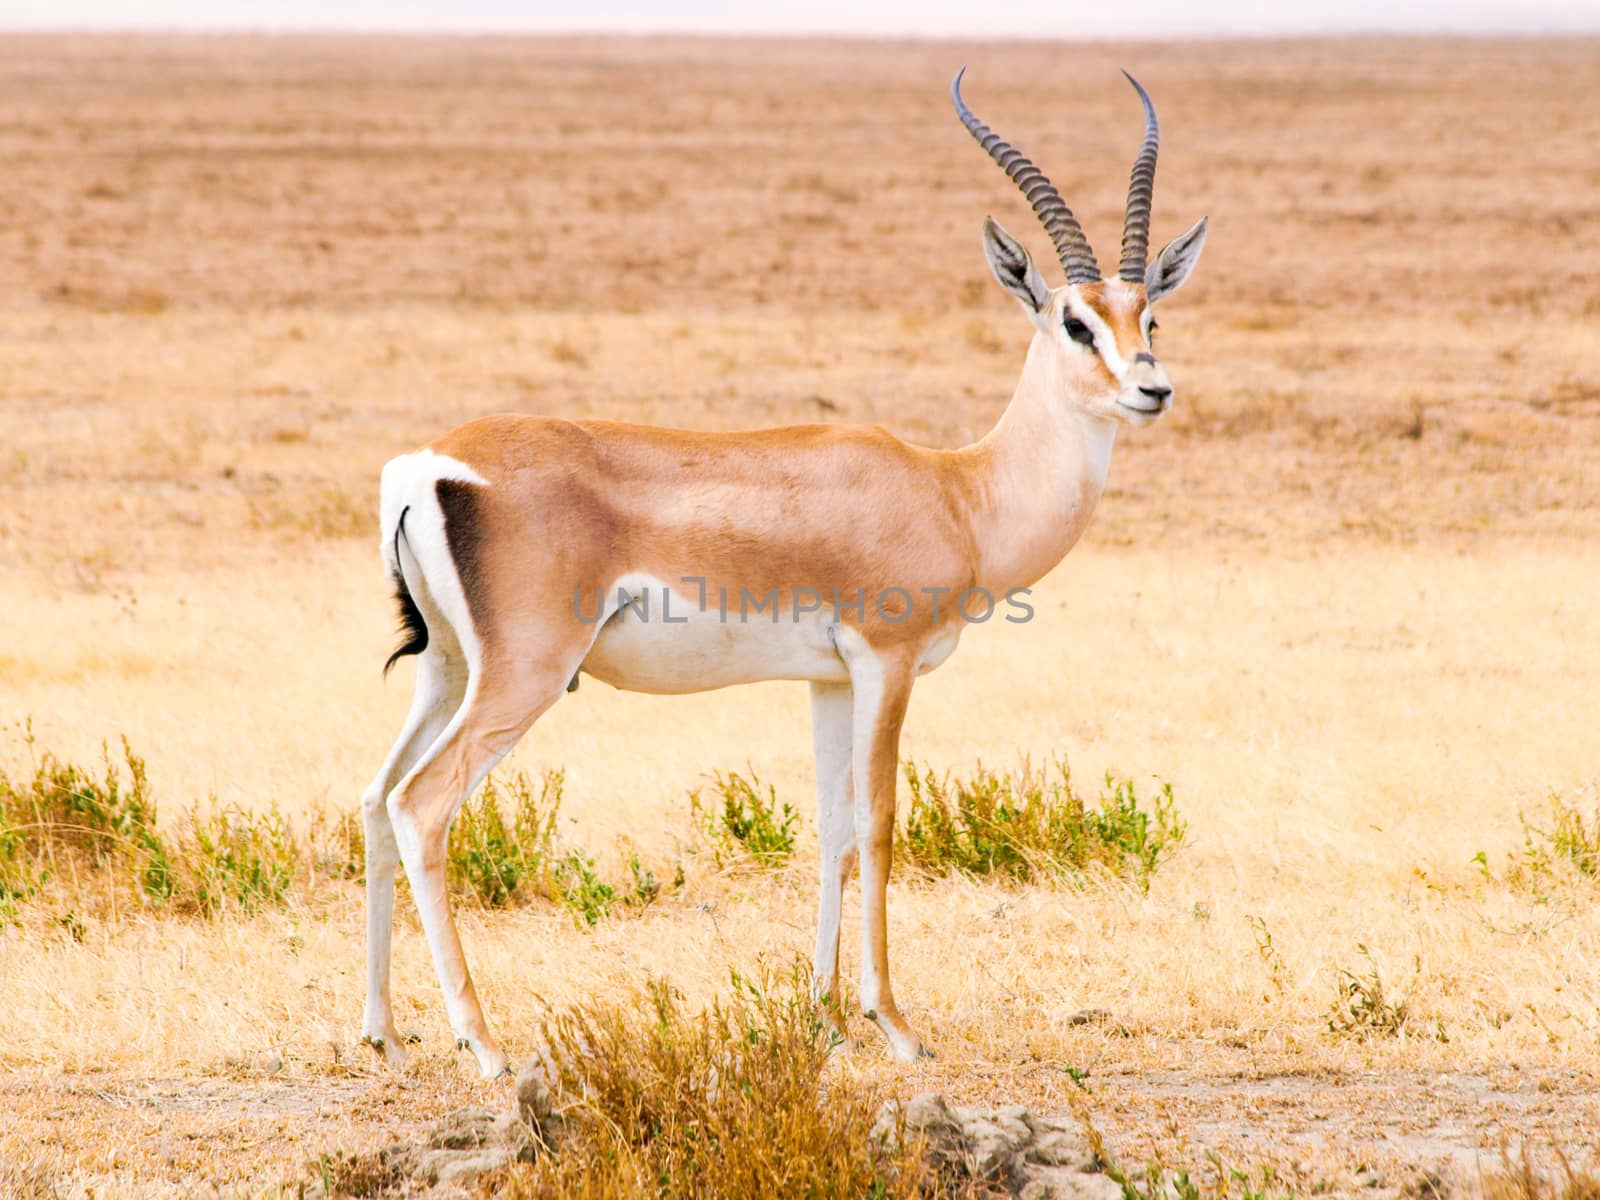 Impala in the natural habitat of savanna, Africa.